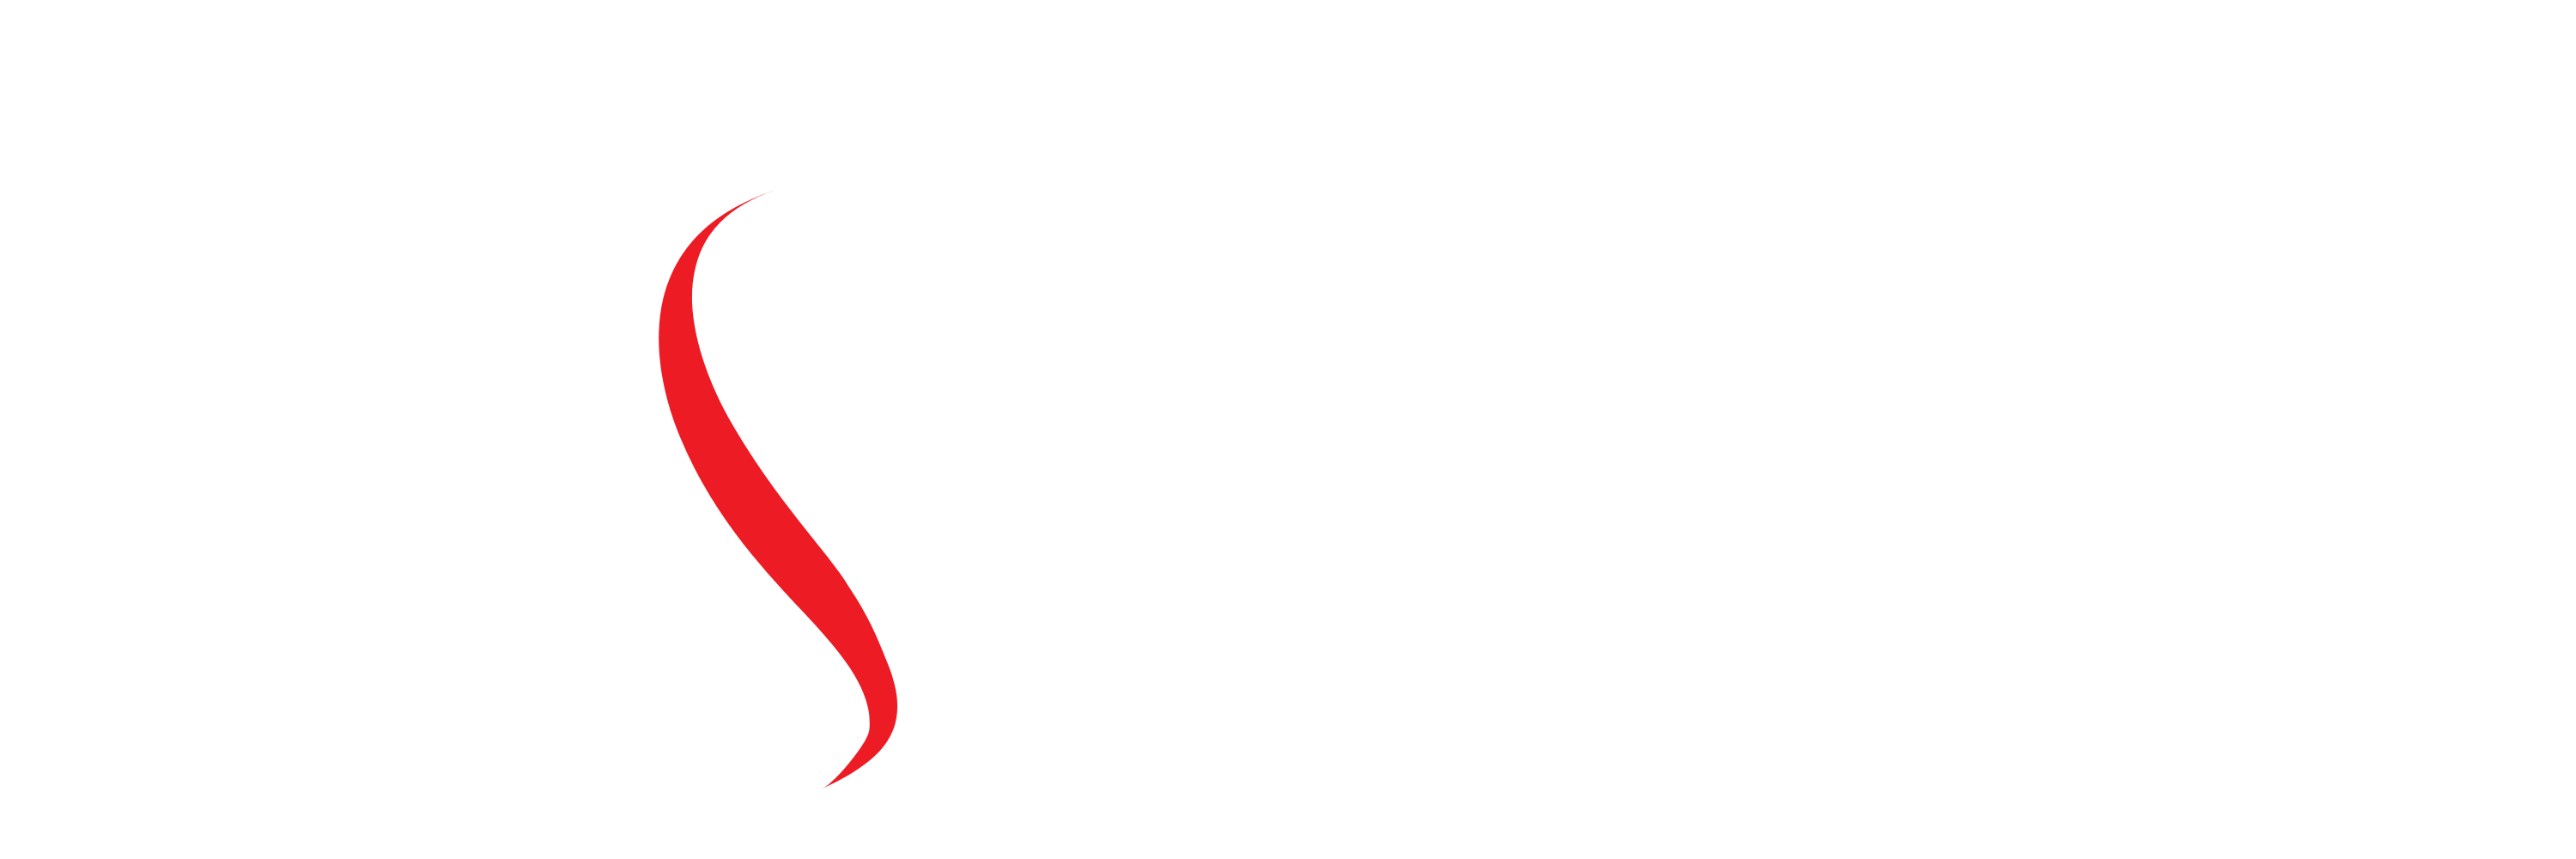 Família Nova Aliança